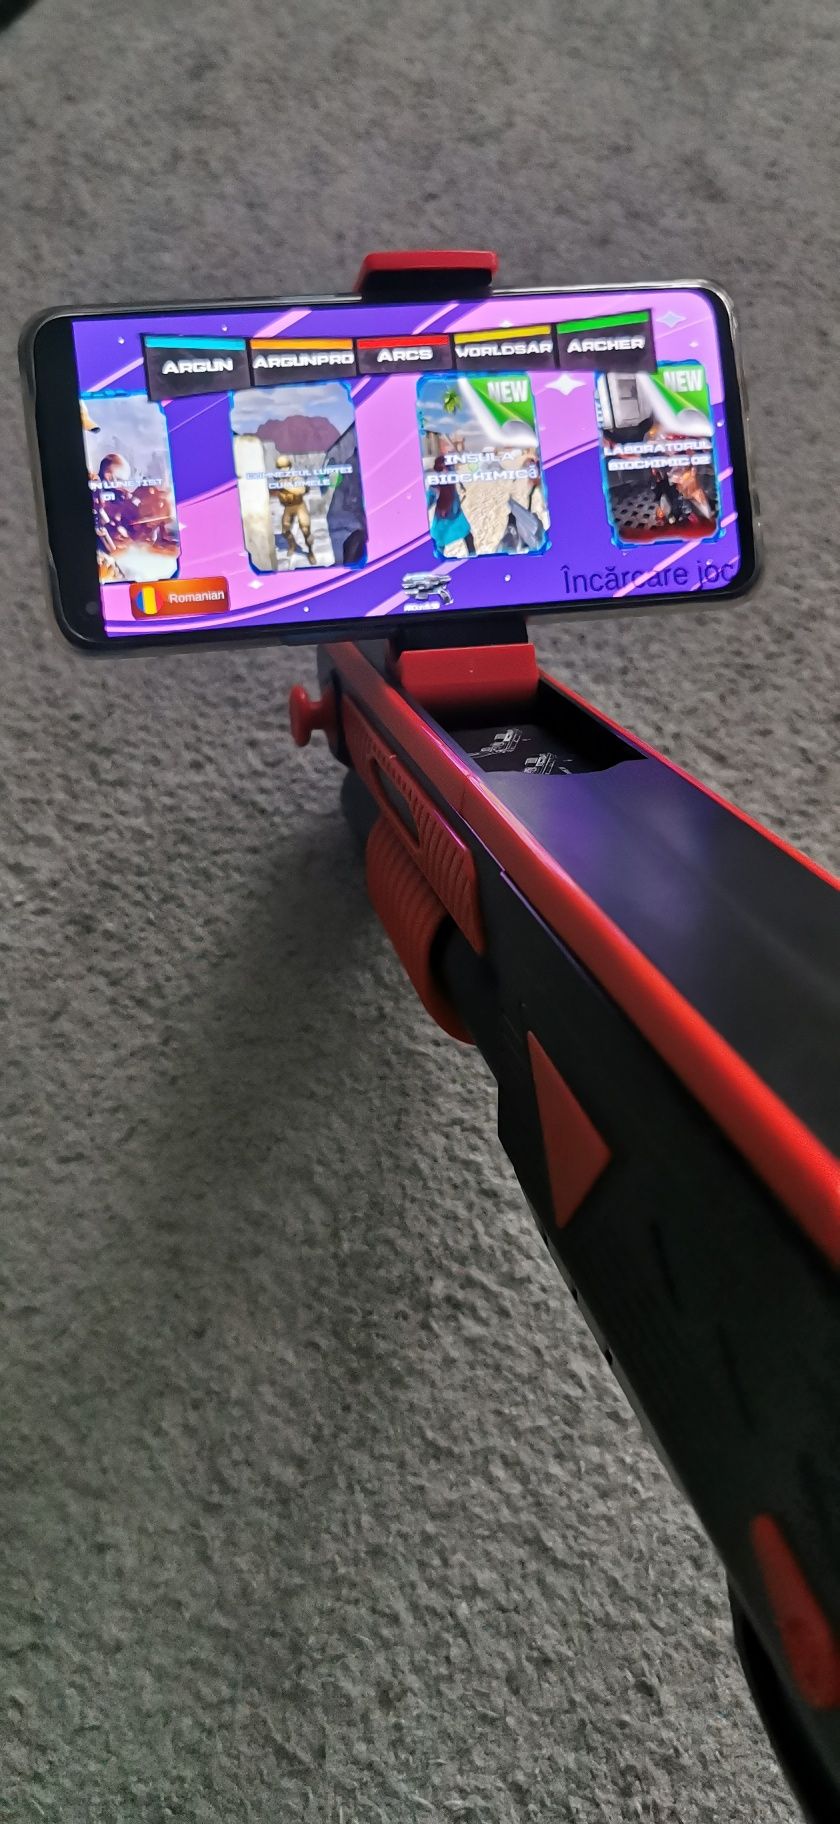 Arma pentruVR (joc virtual)